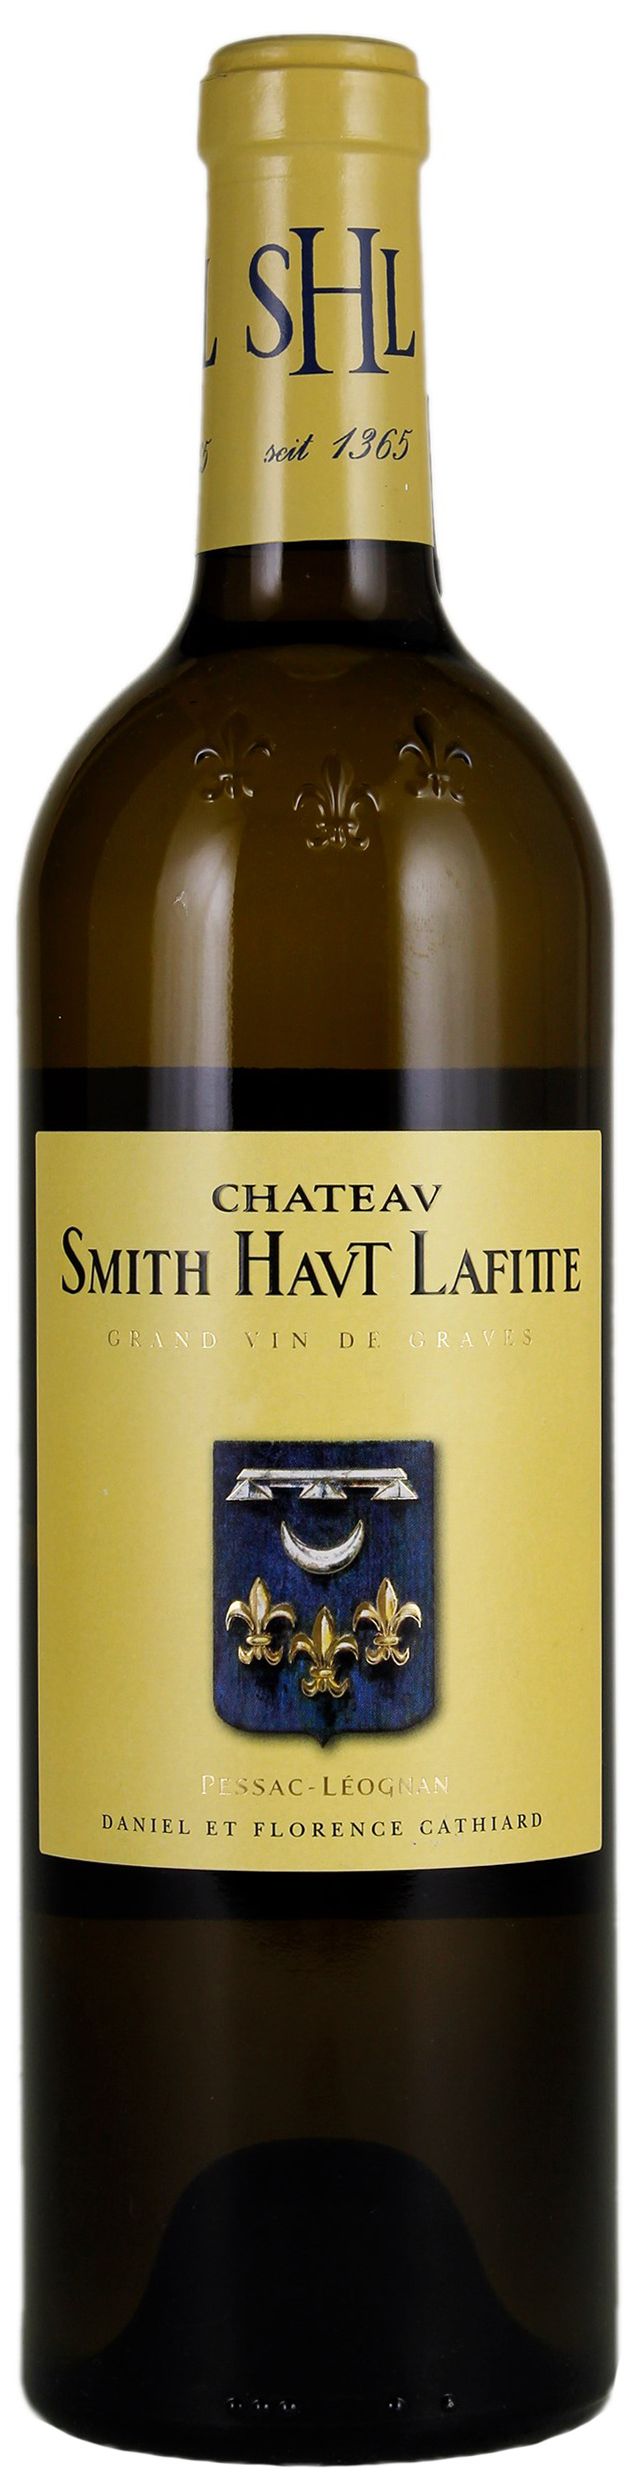 Chateau Smith Haut Lafitte, Blanc, 2009